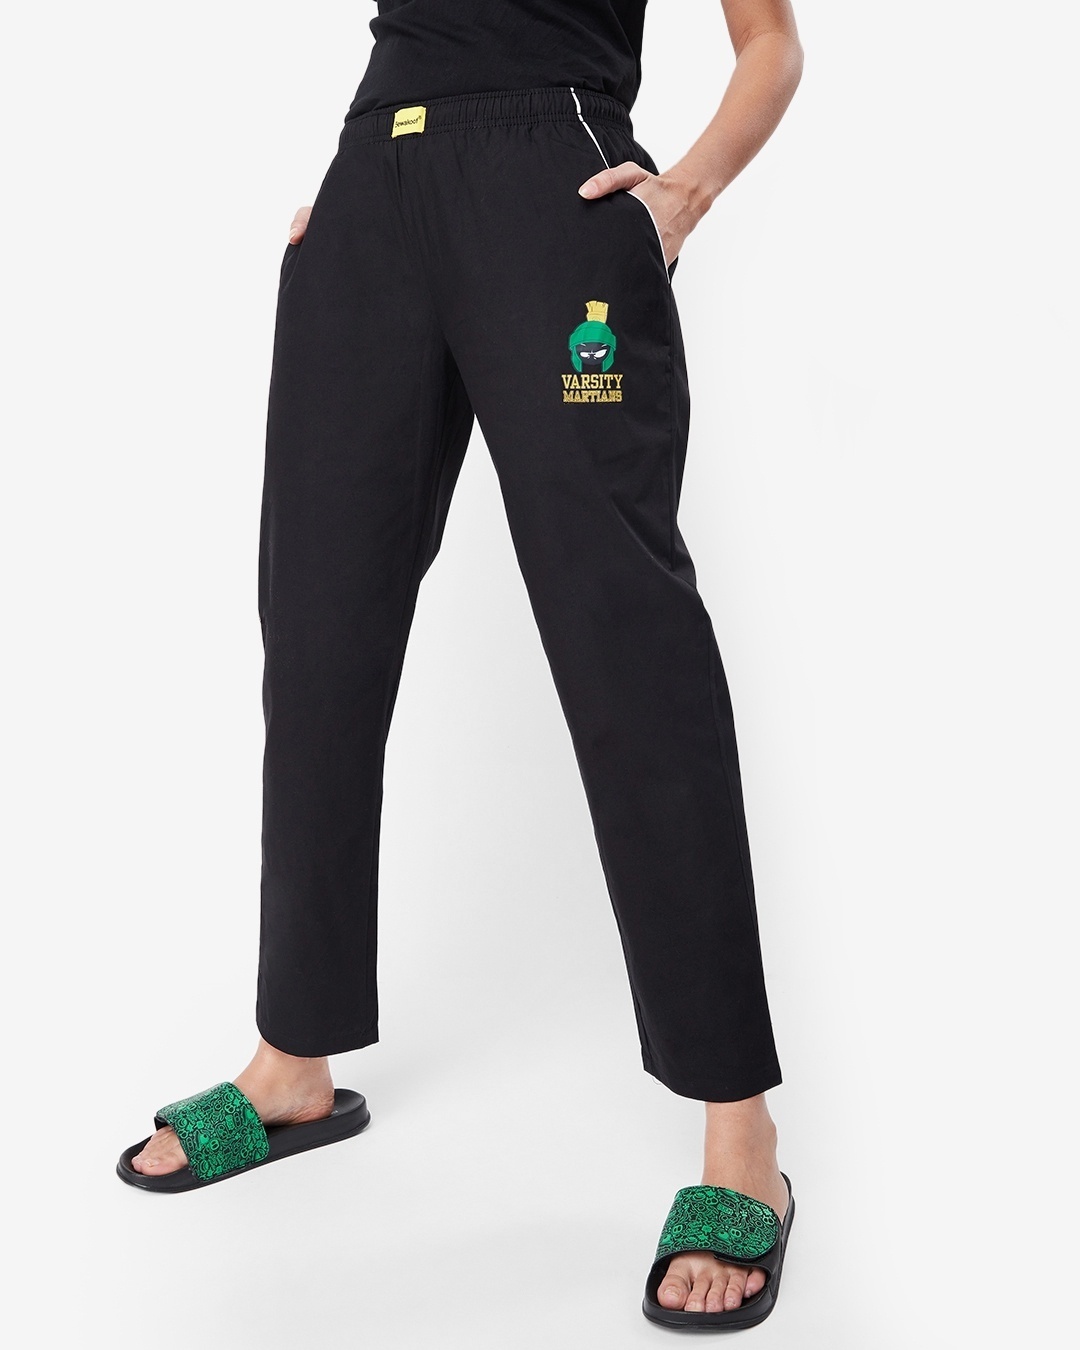 Shop Women's Black Varsity Martians Typography Pyjamas-Front